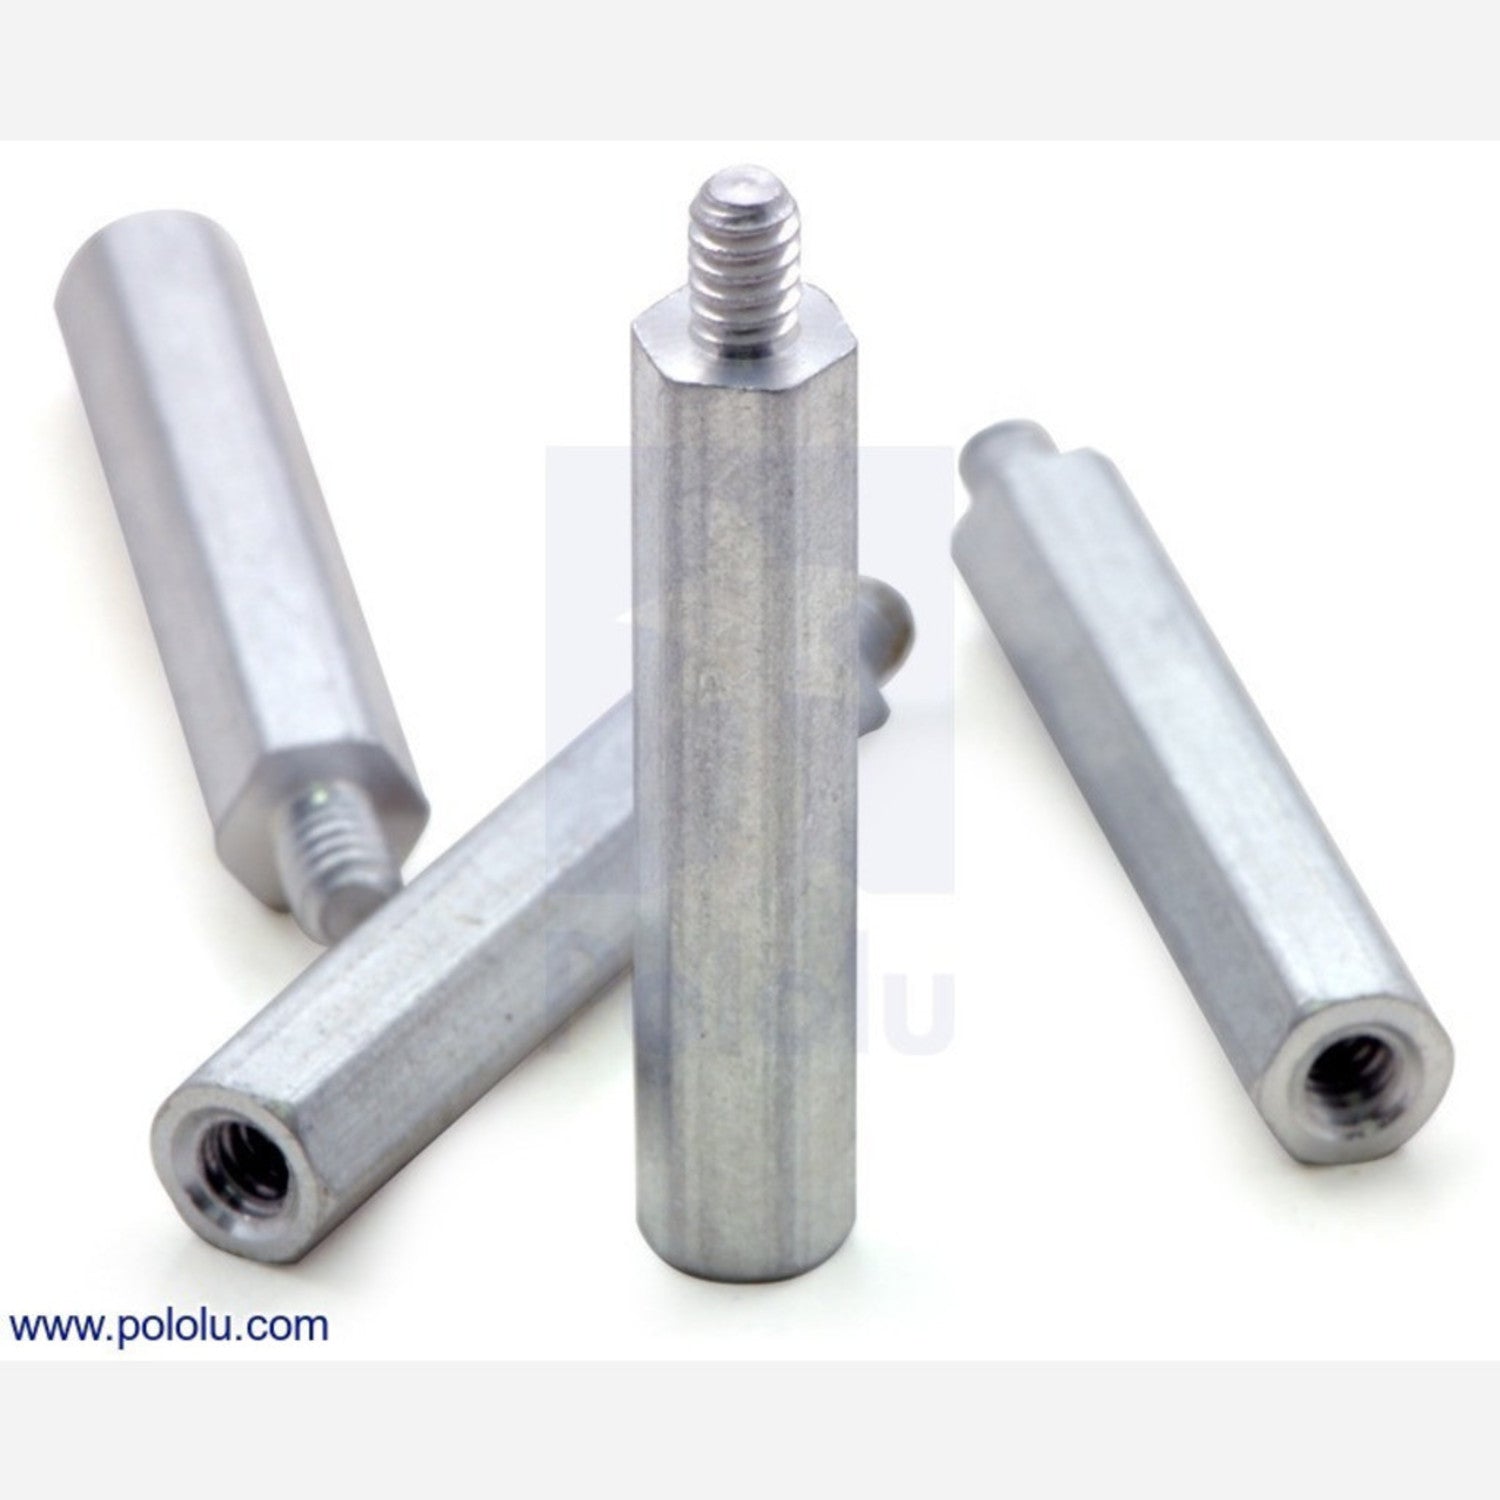 Aluminum Standoff: 1" Length, 4-40 Thread, M-F (4-Pack)